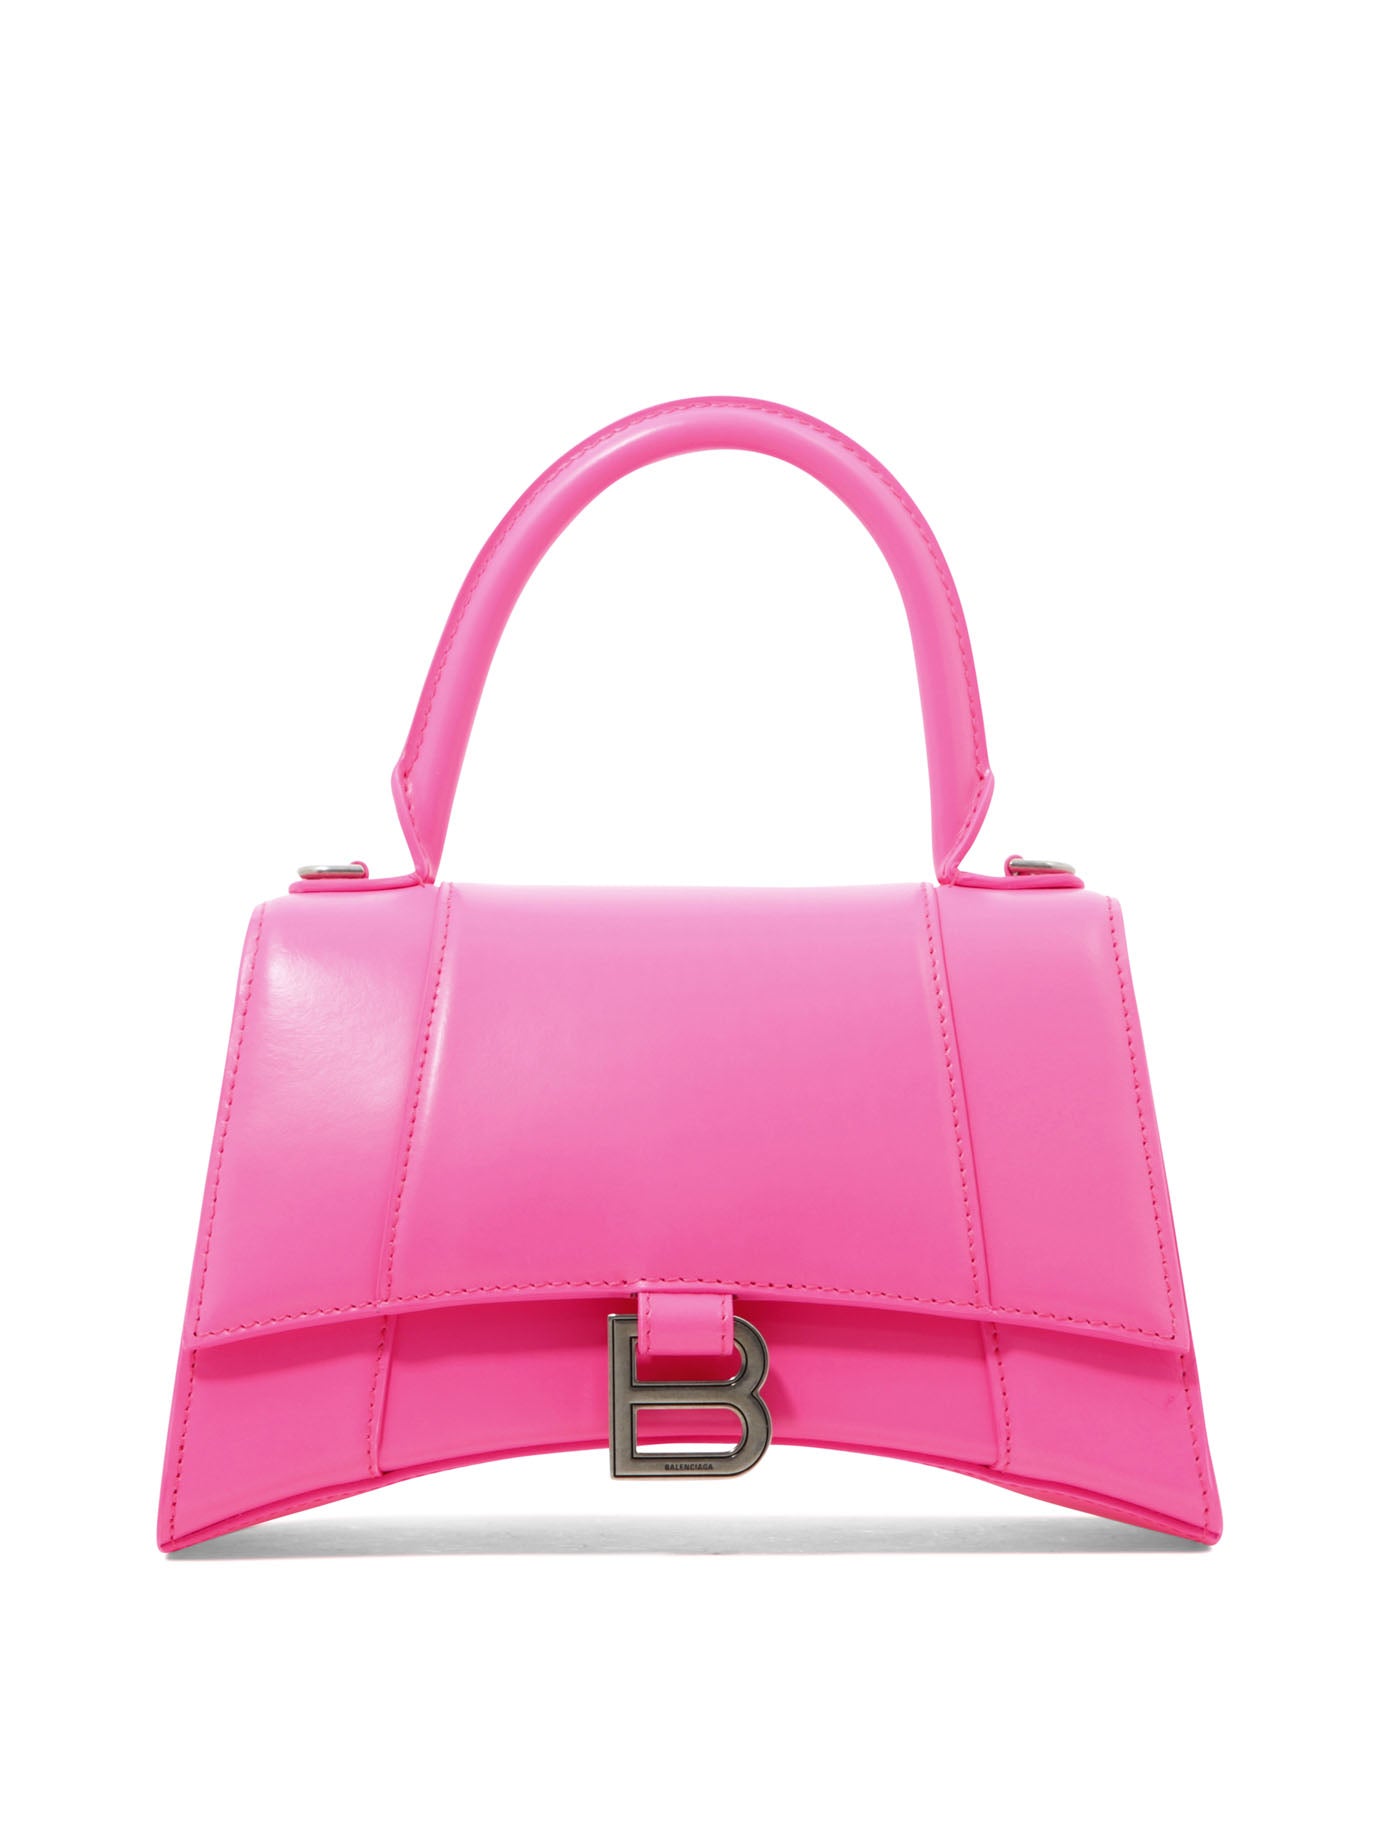 Balenciaga Pink Leather Top-handle Handbag For Women